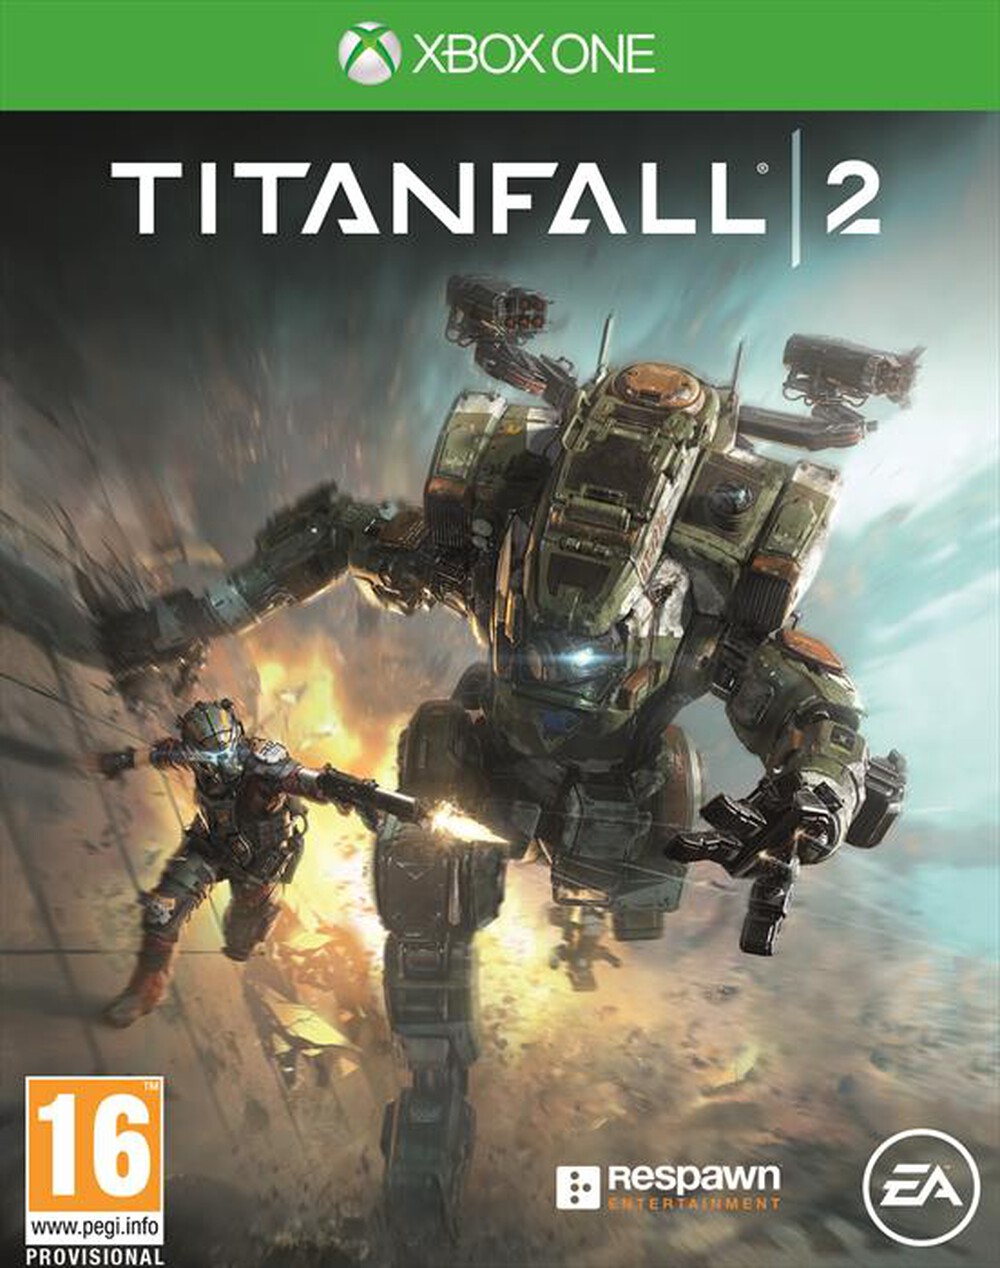 "ELECTRONIC ARTS - Titanfall 2 Xbox One - "